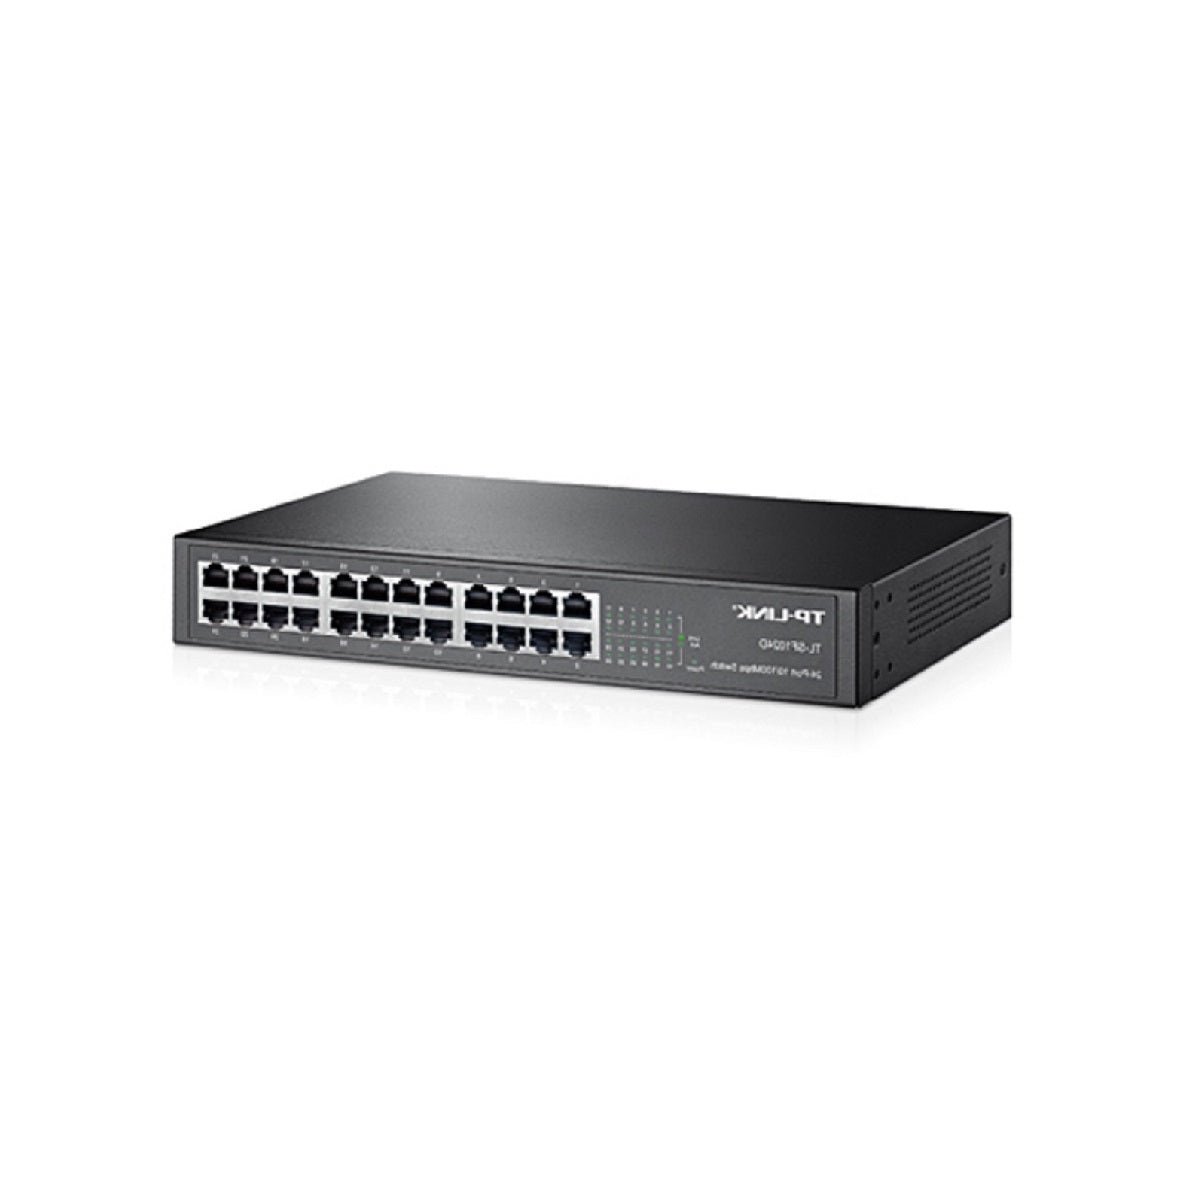 TP-LINK TL-SF1024D 24 Port Fast Ethernet Switch